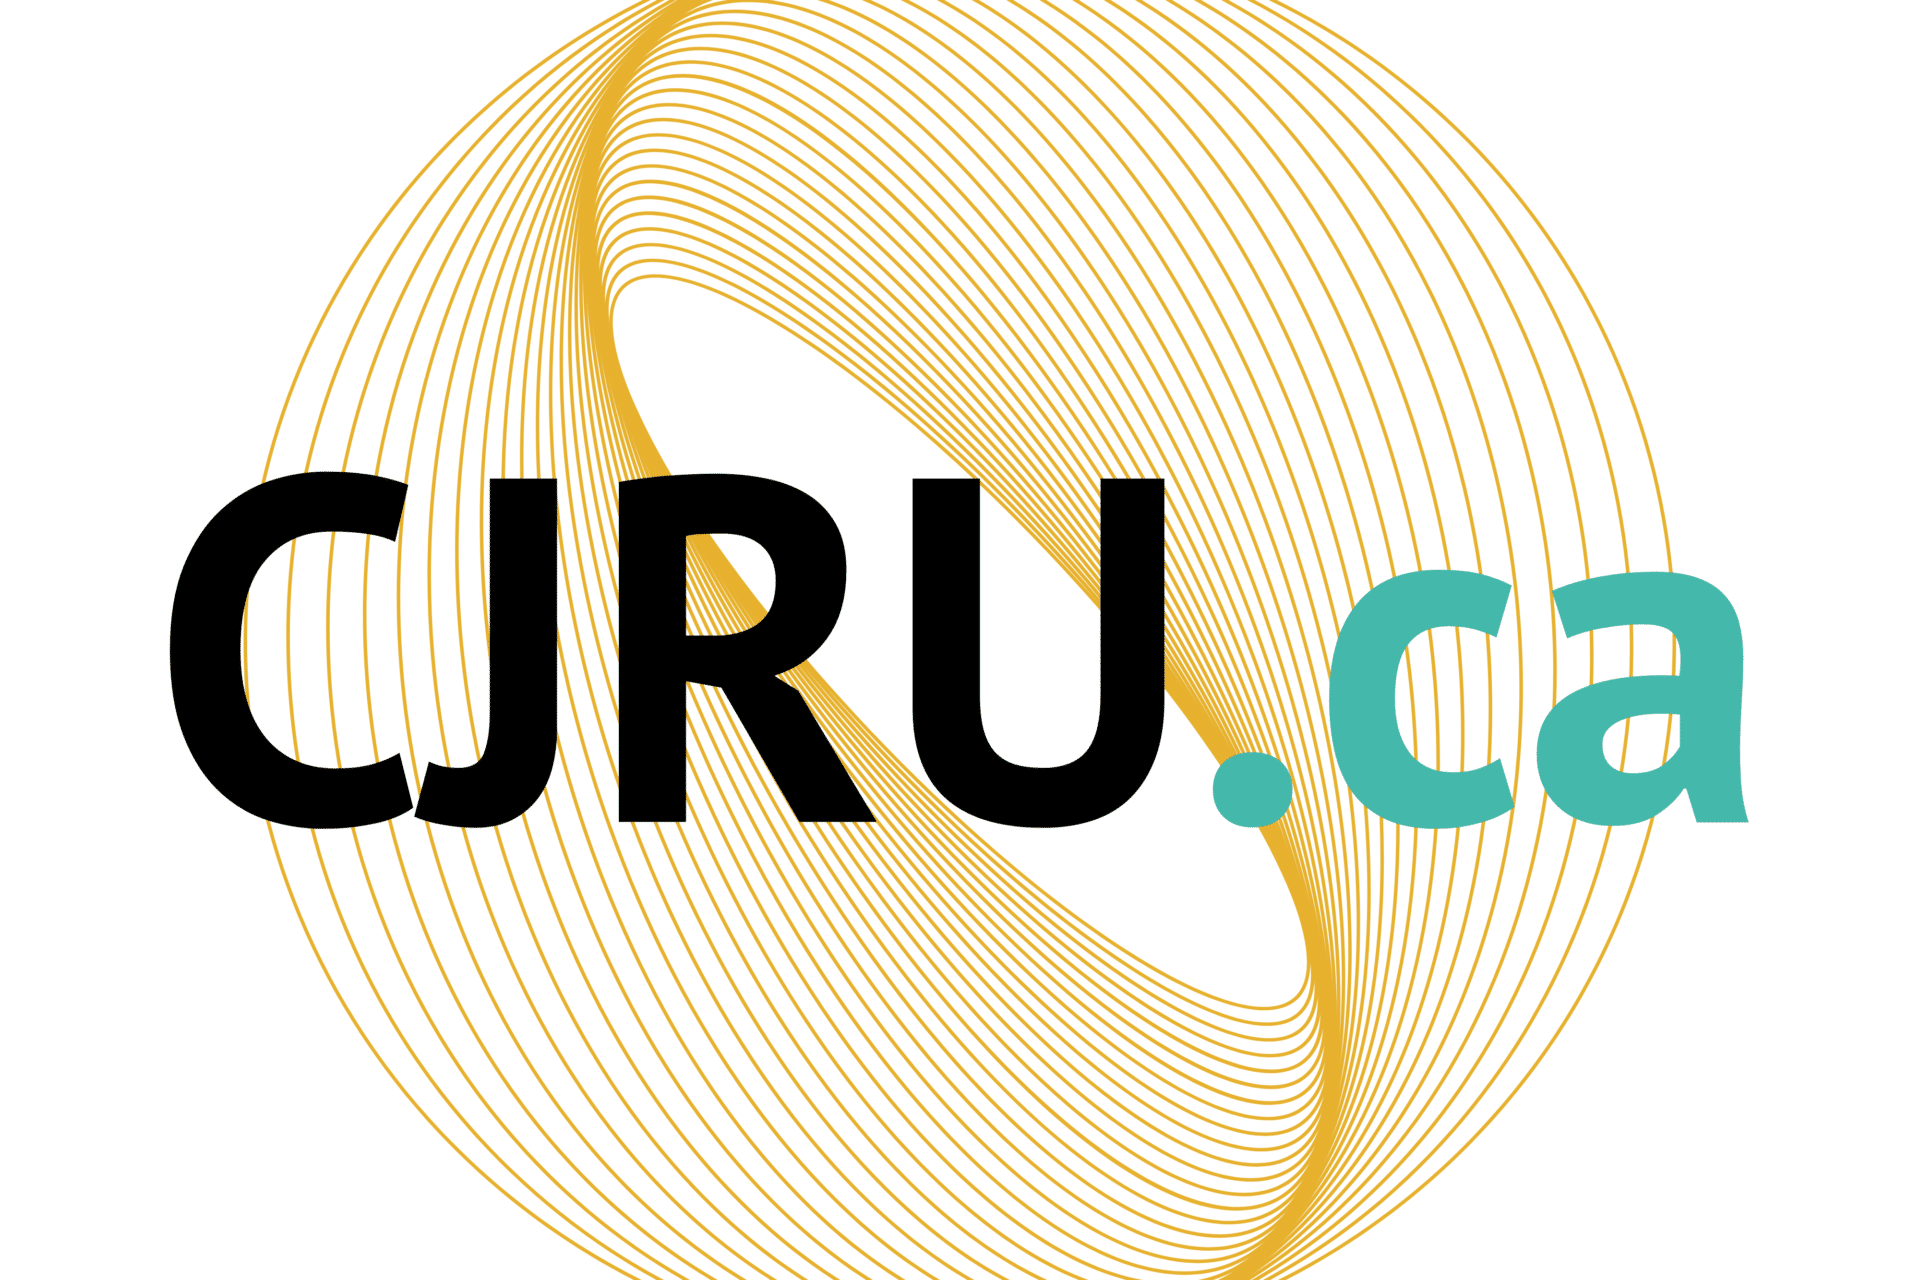 CJRU.ca has a new website